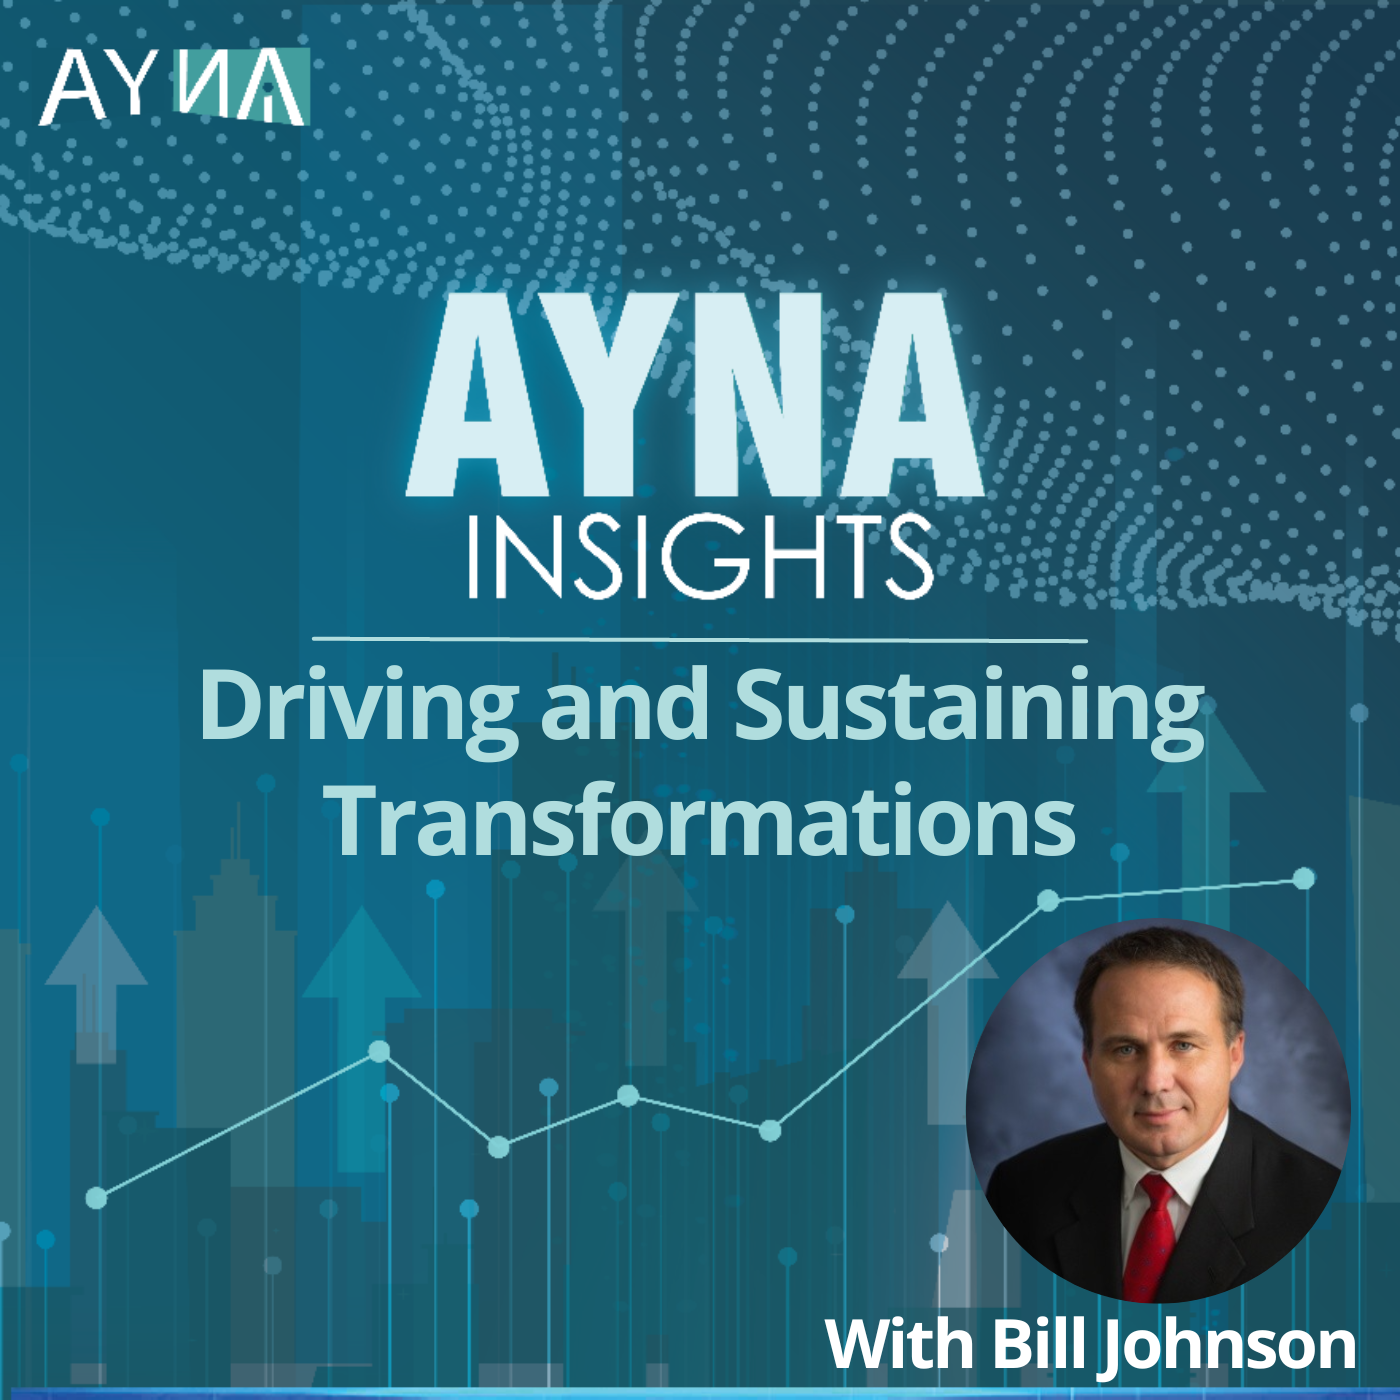 Bill Johnson: Driving and Sustaining Transformations